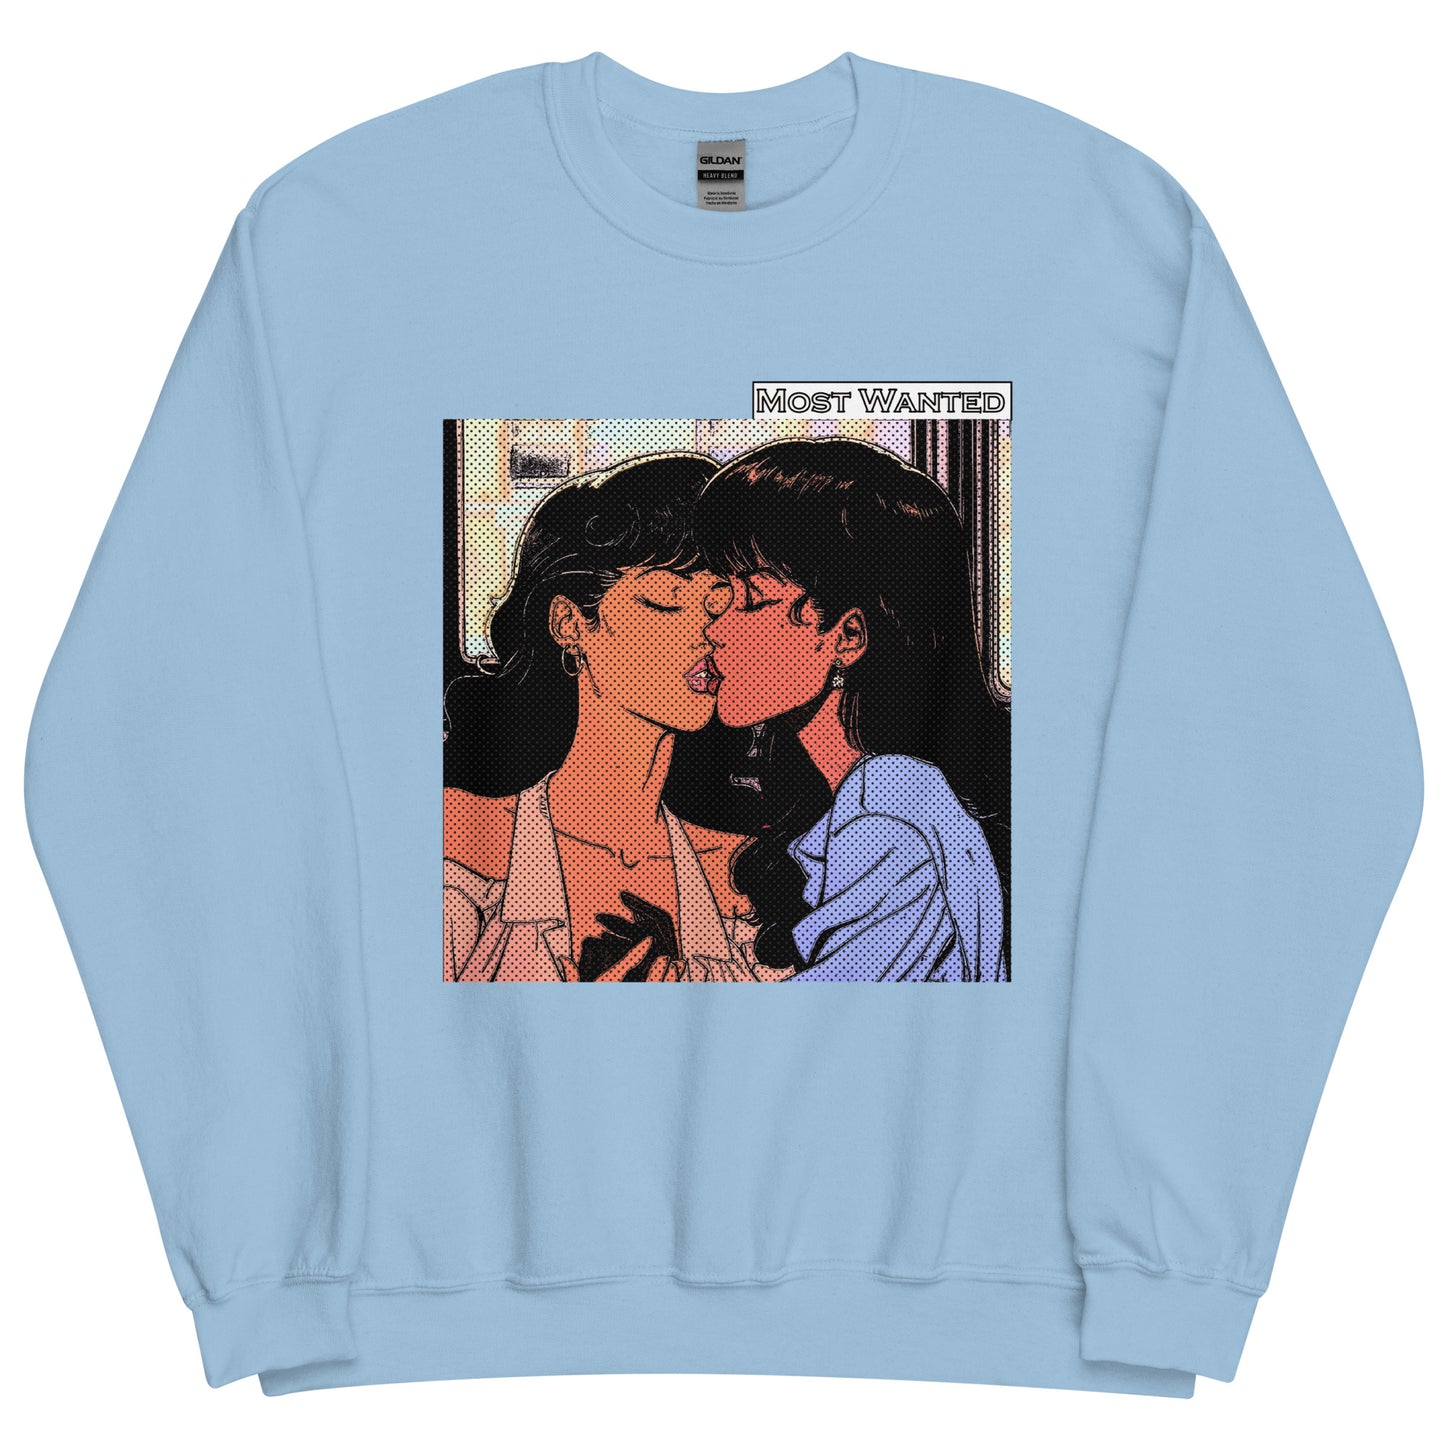 2 Girls 1 Kiss (Most Wanted) Sweatshirt #2